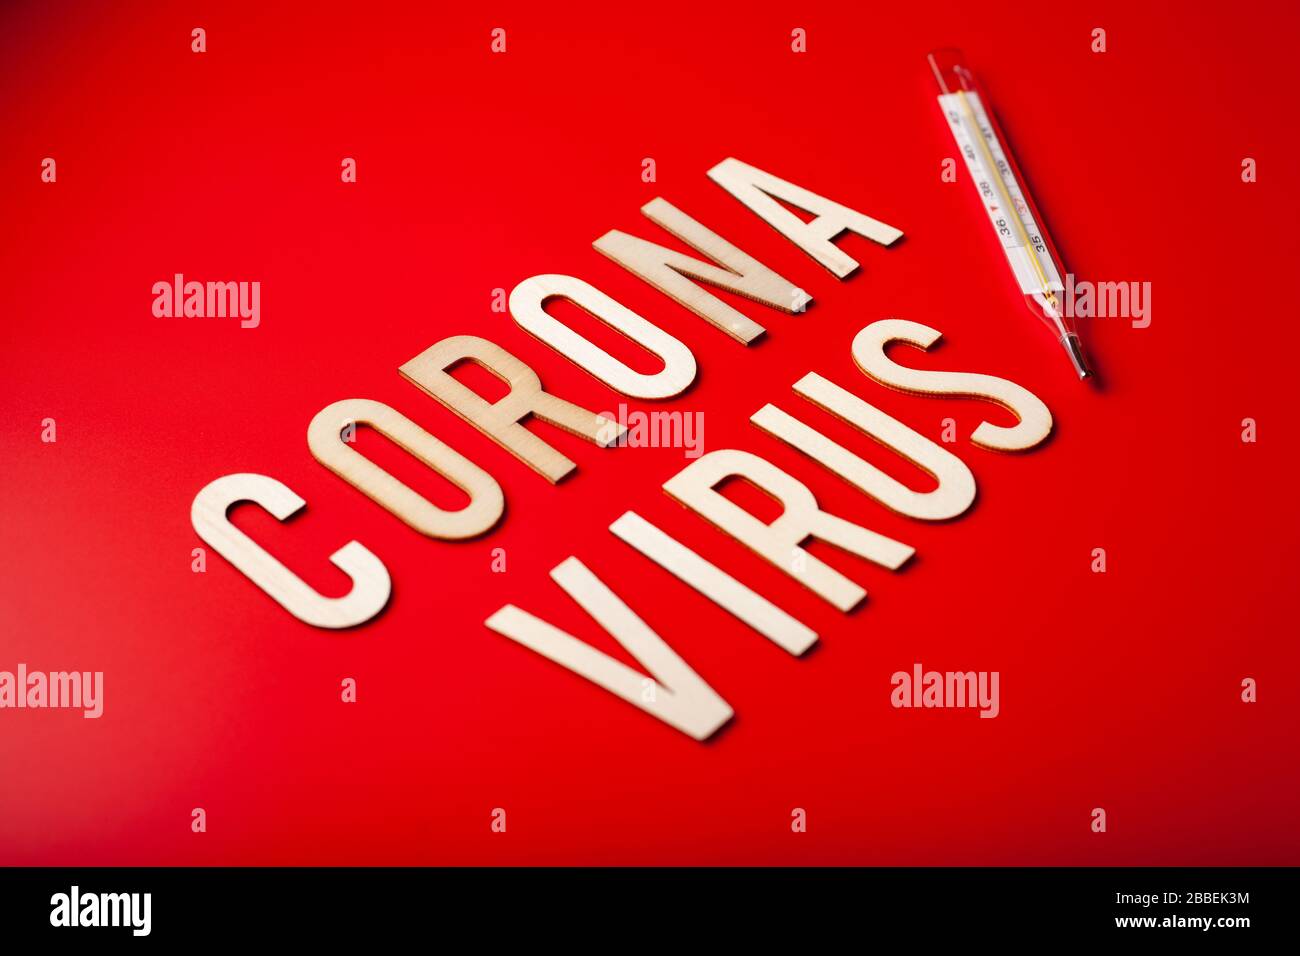 coronavirus word text wooden letter on red background corona virus covid-19 Stock Photo